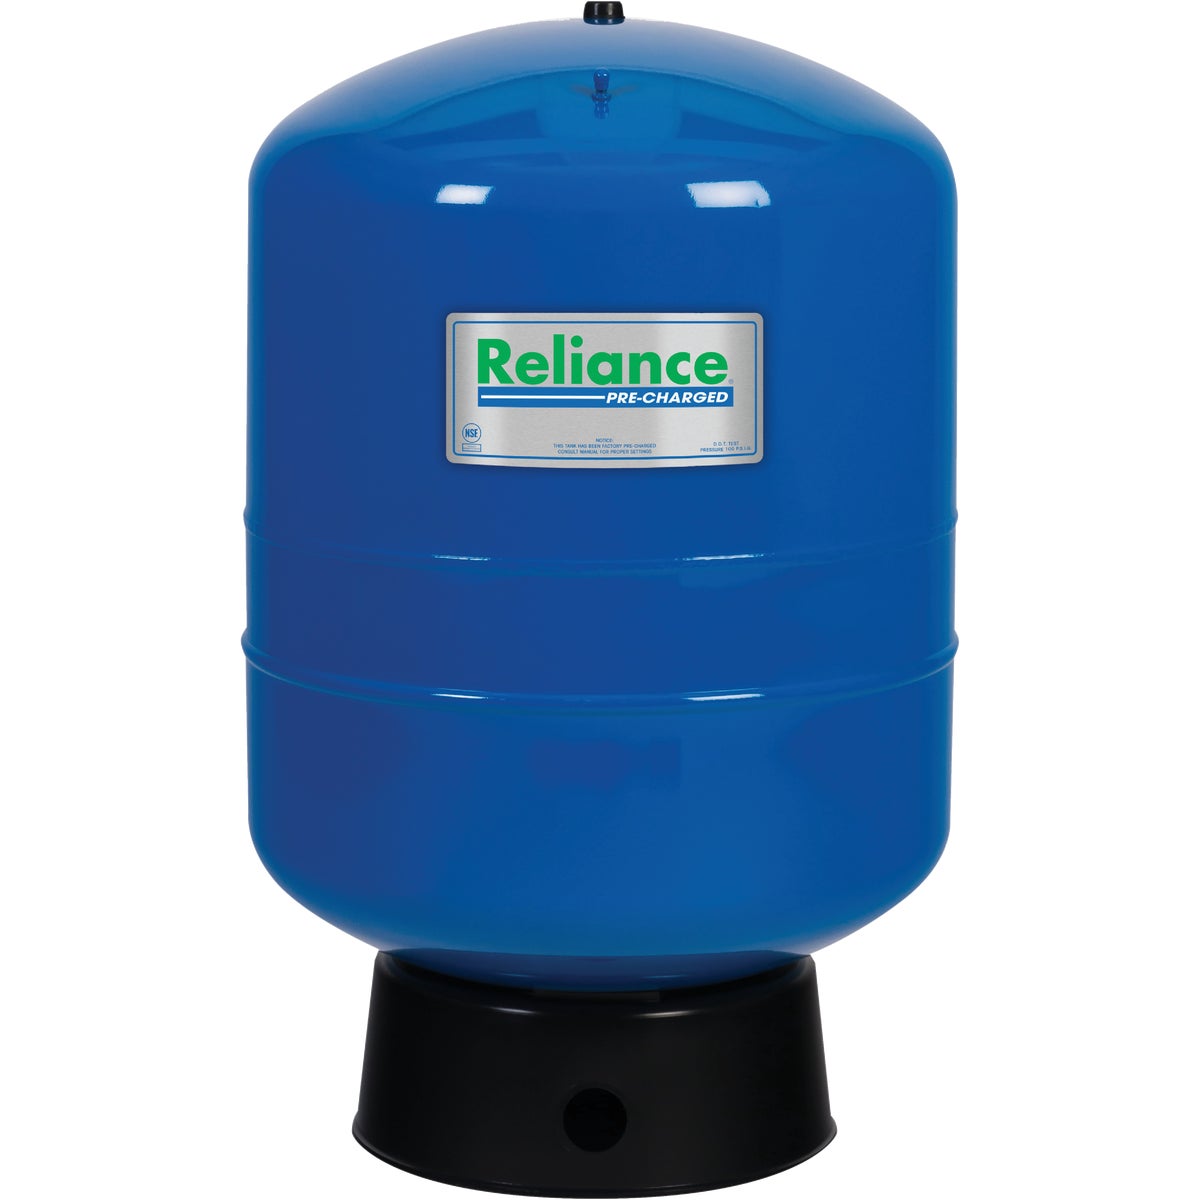 Reliance 36 Gal. Vertical Free-Standing Pressure Tank